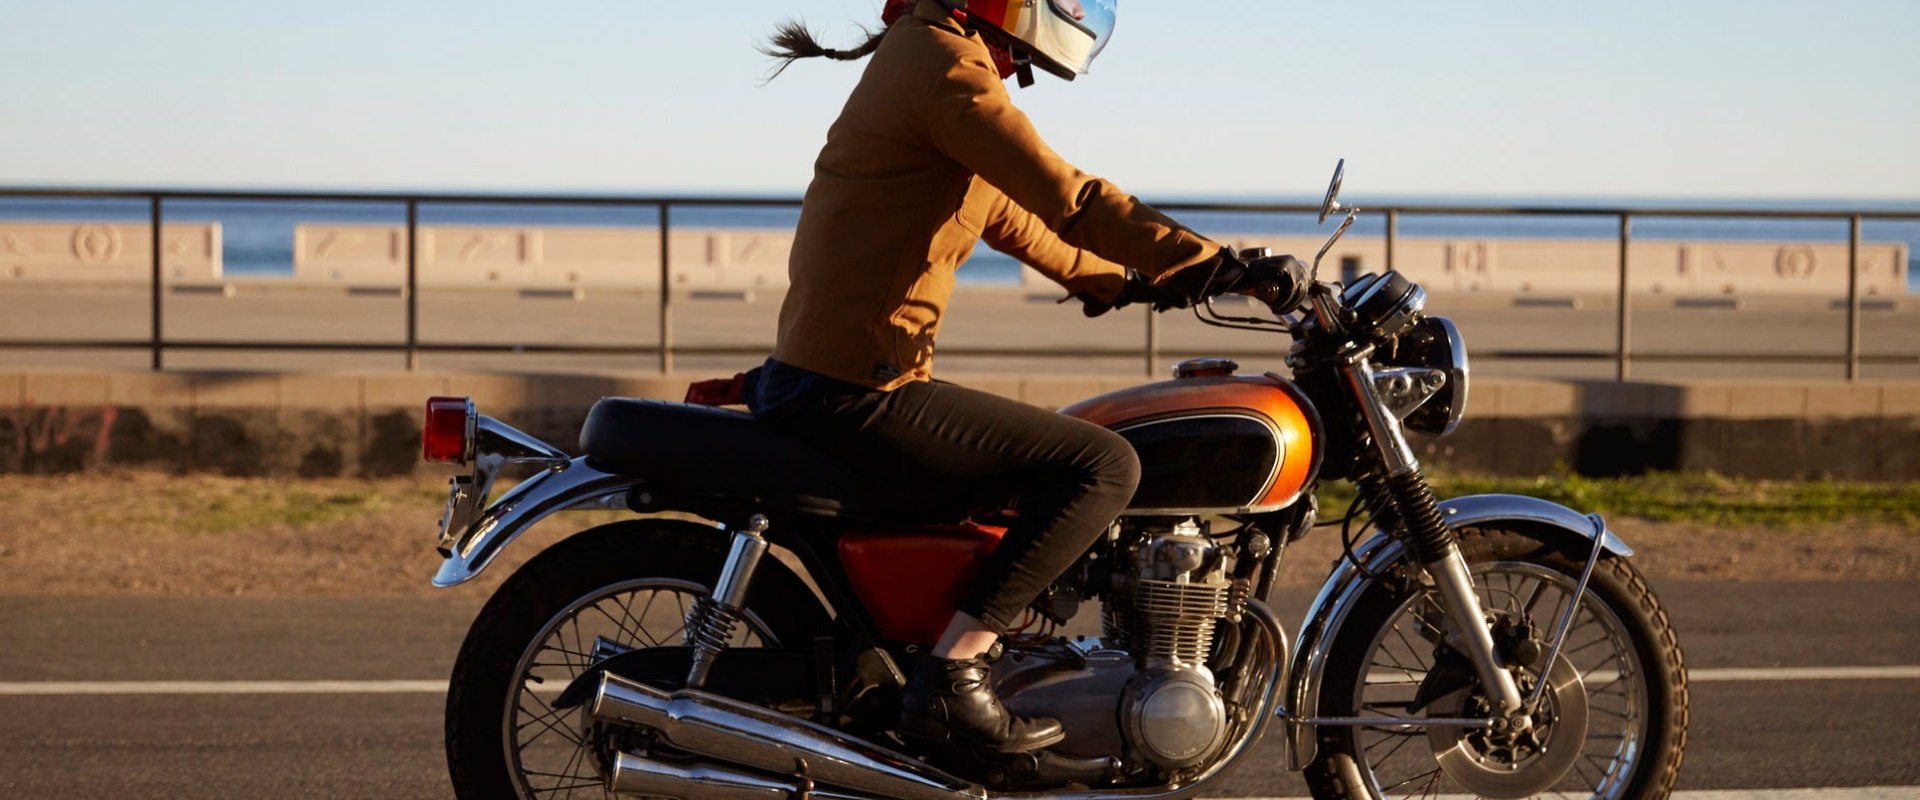 Motorcycle Insurance for Harley-Davidson Bikes